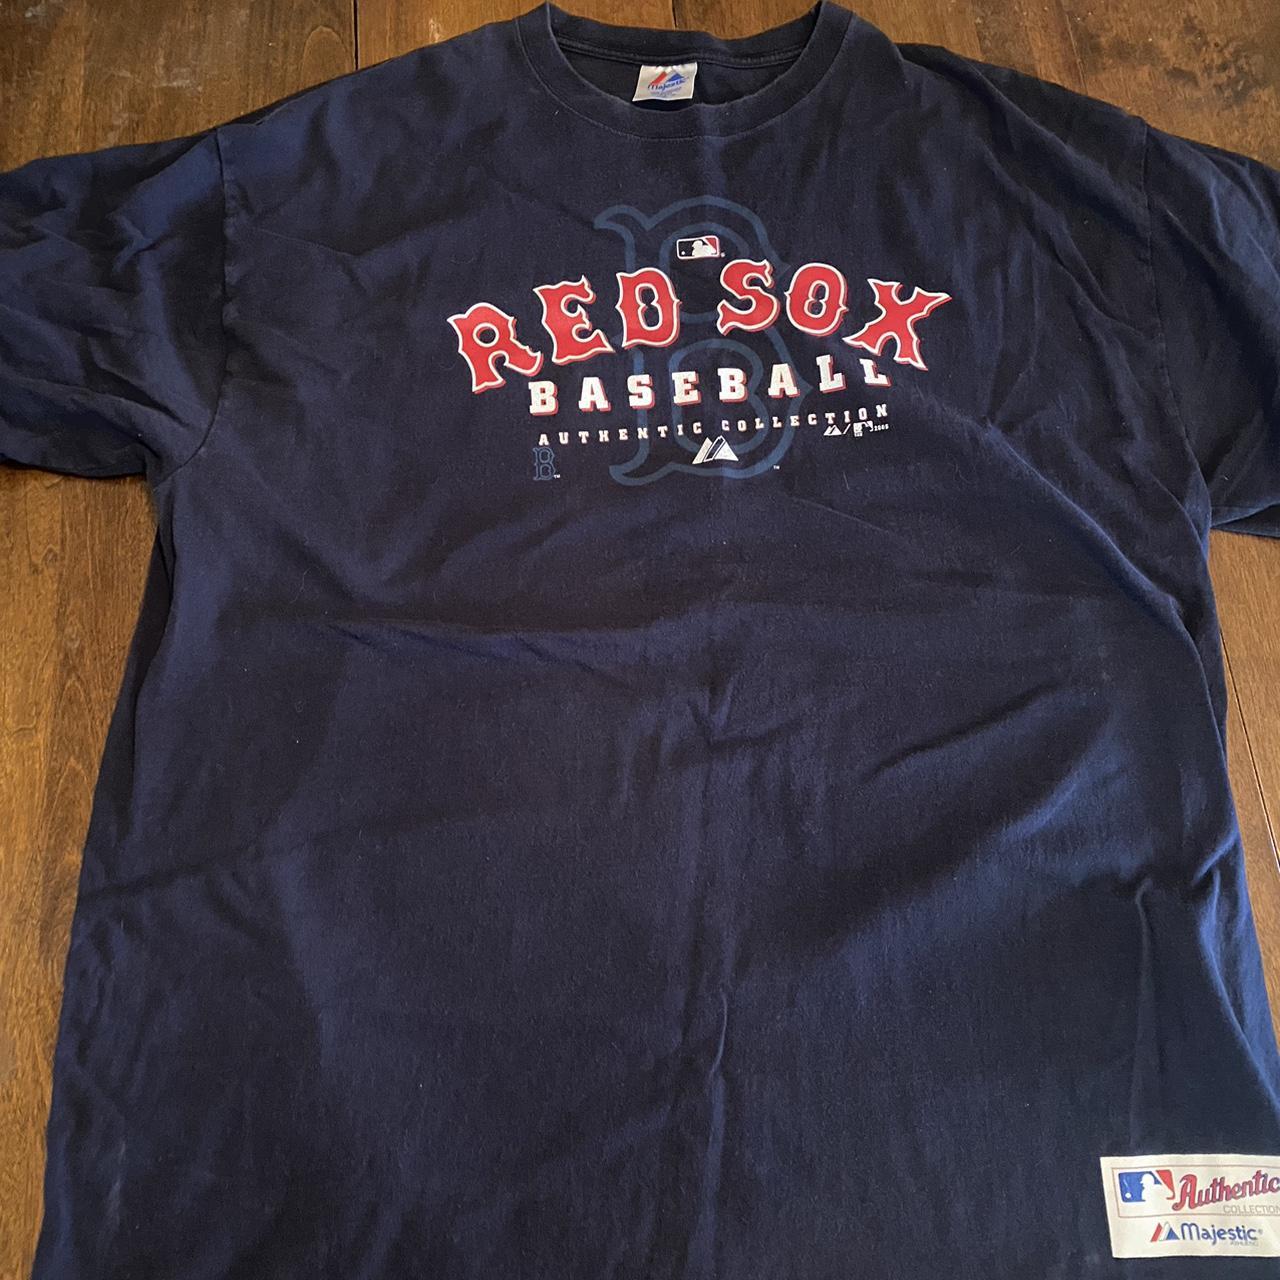 Vintage red sox tee, XXL #redsox #baseball - Depop